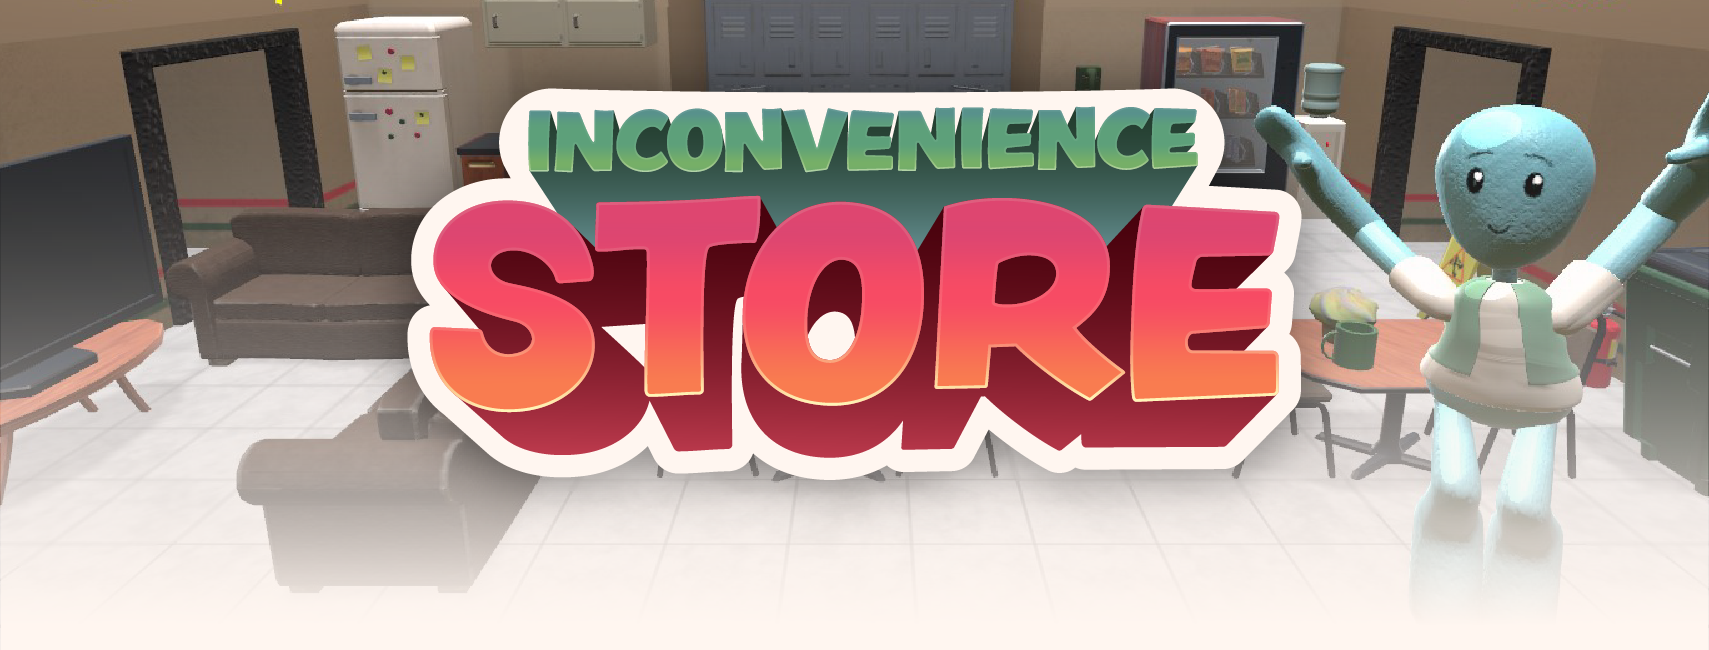 Inconvenience Store